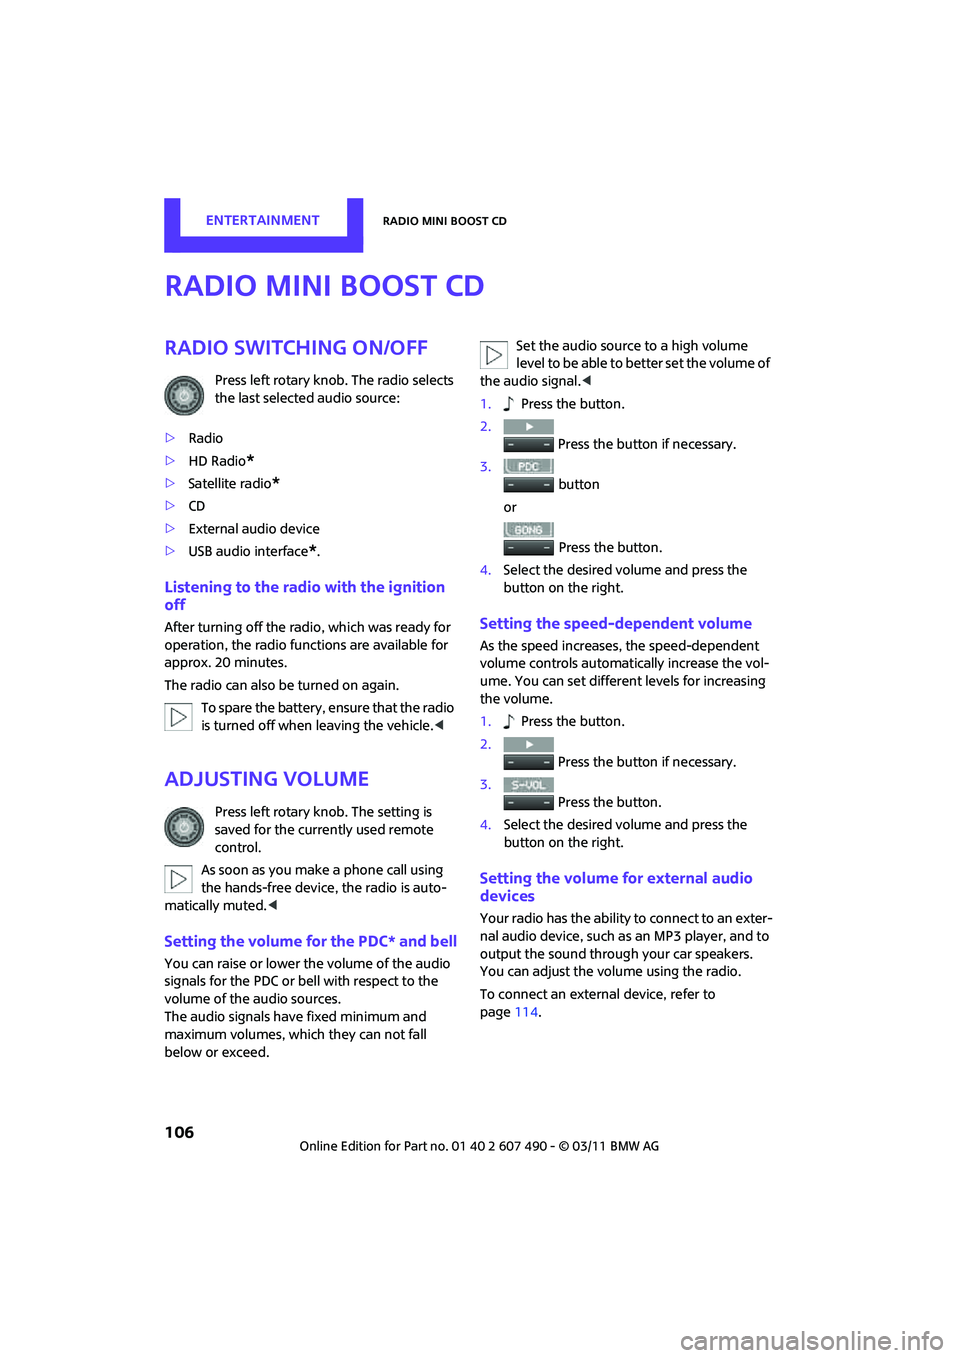 MINI COOPER 2011  Owners Manual ENTERTAINMENTRadio MINI Boost CD
106
Radio MINI Boost CD
Radio switching on/off
Press left rotary knob. The radio selects 
the last selected audio source:
> Radio
> HD Radio
*
>Satellite radio*
>CD
> 